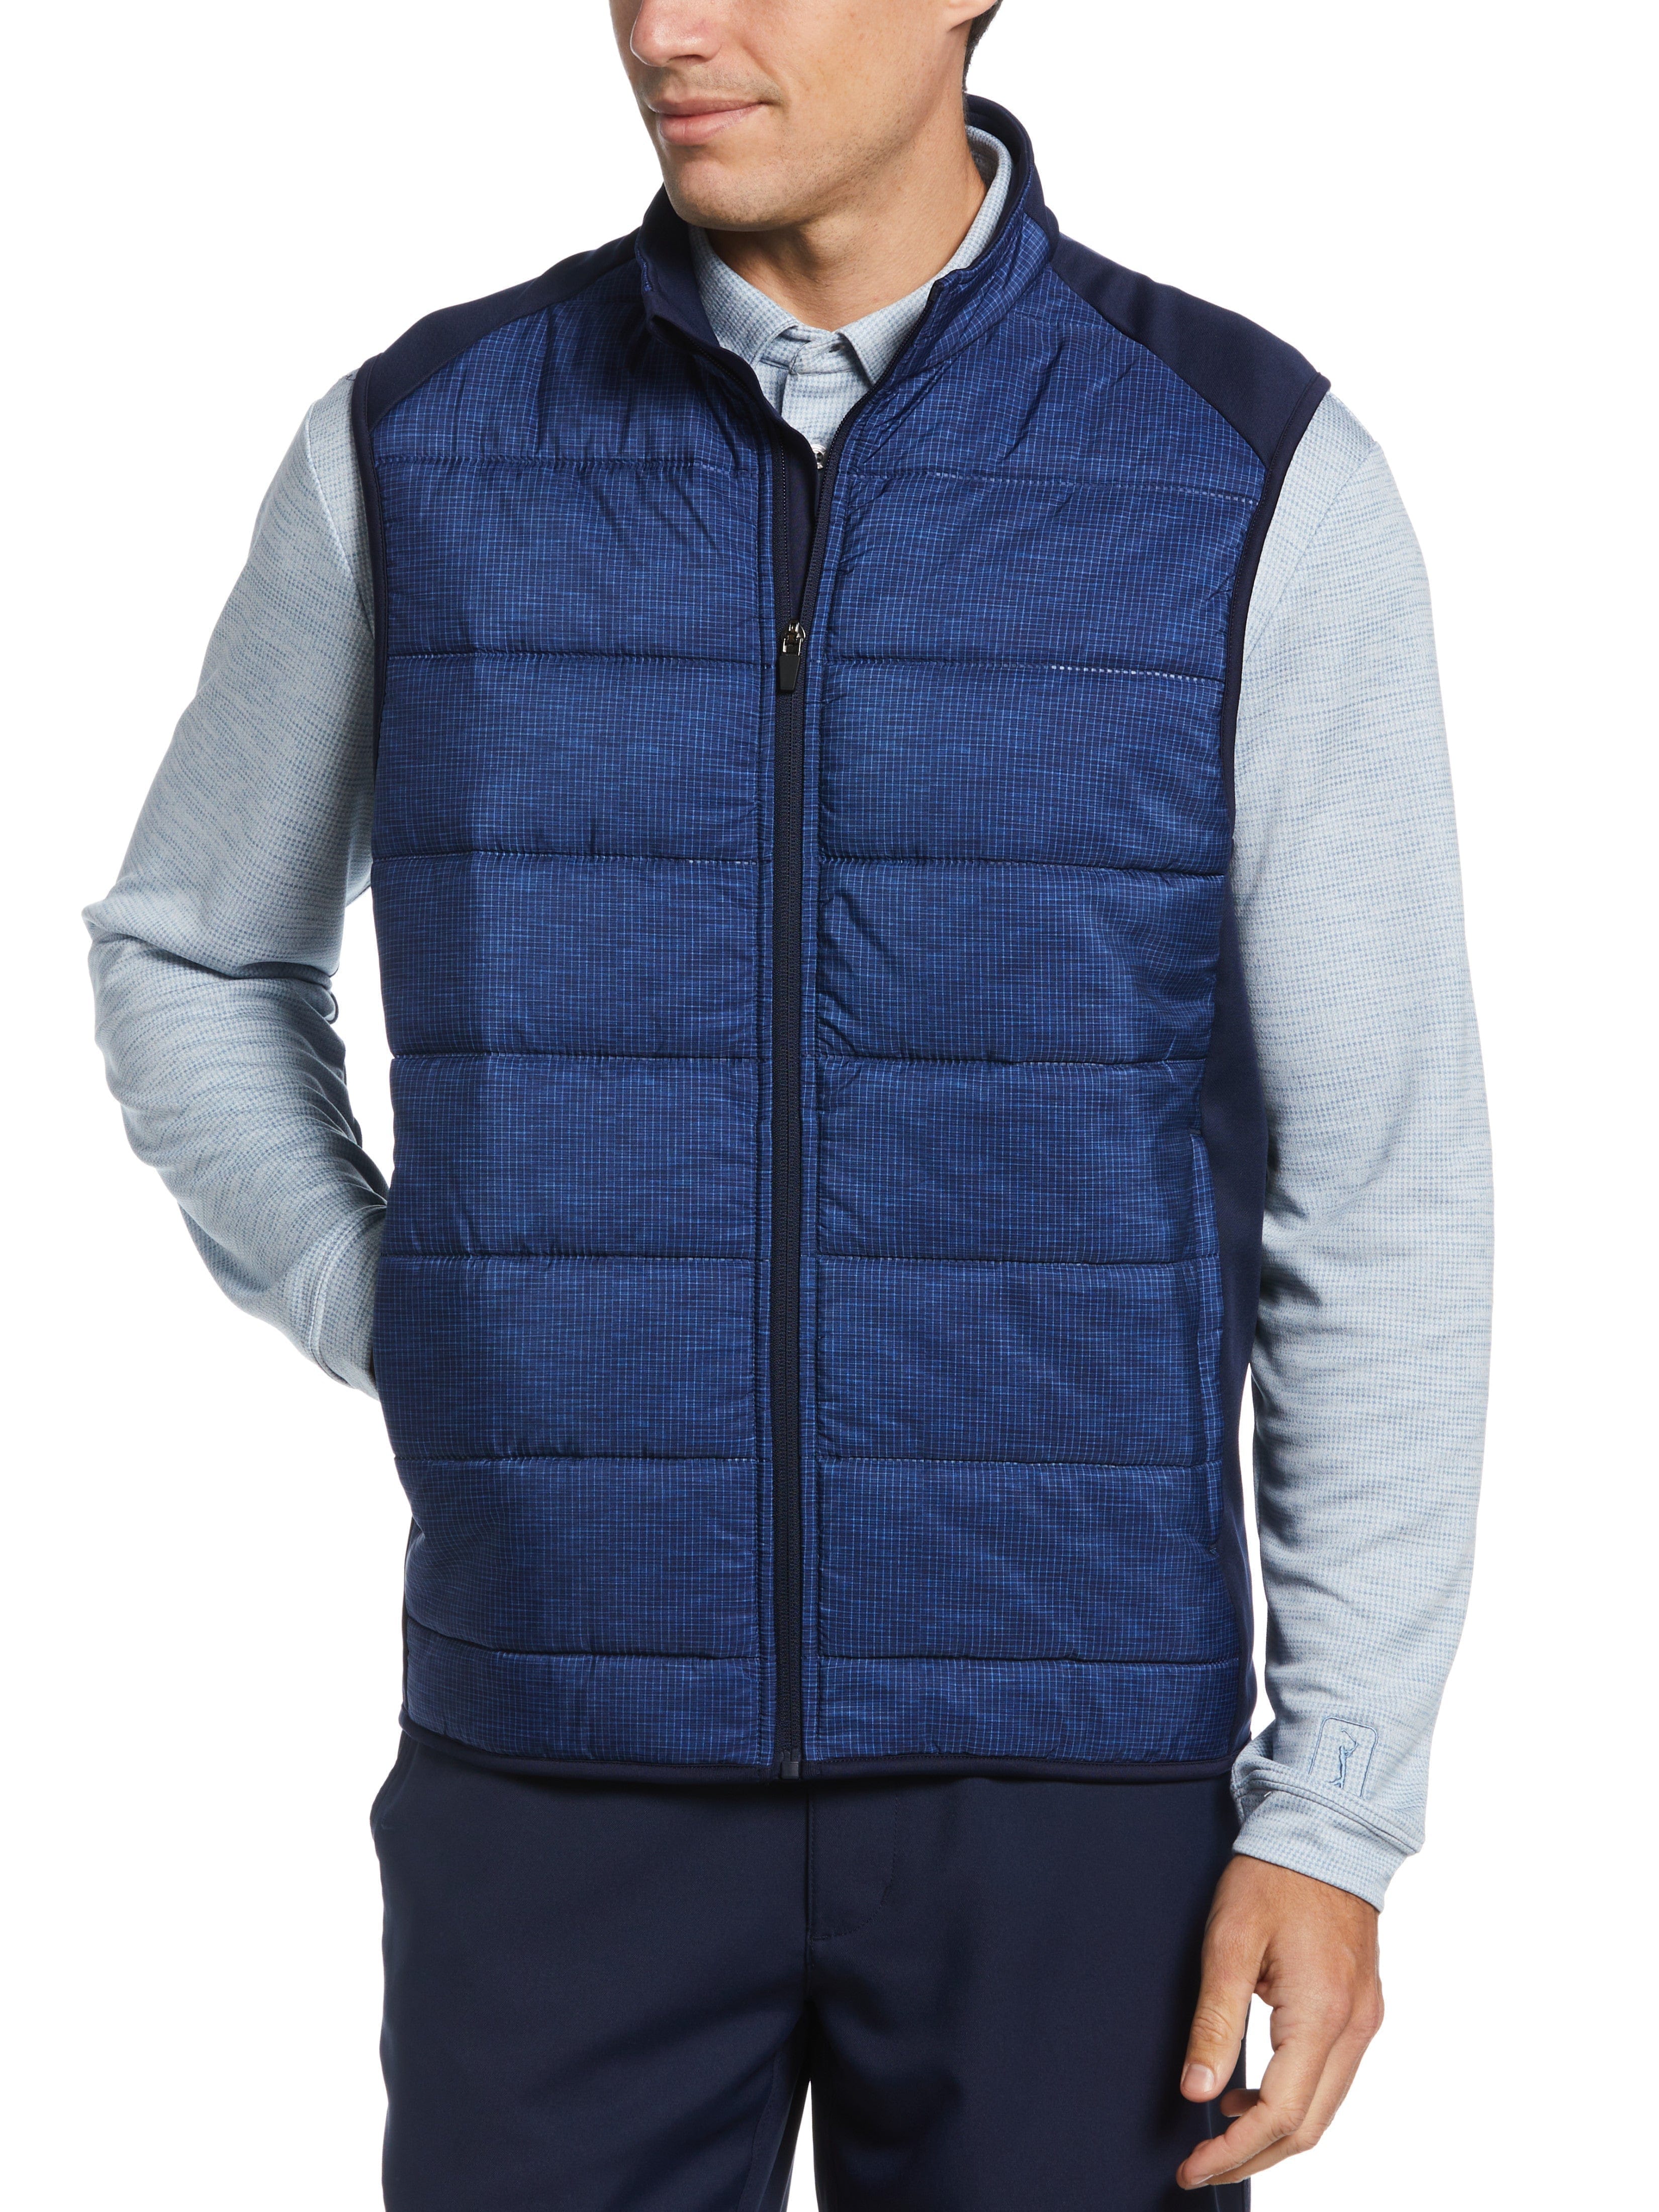 PGA TOUR Apparel Mens Ultrasonic Print Full Zip Golf Vest Jacket Top, Size Medium, Navy Blue, 100% Polyester | Golf Apparel Shop